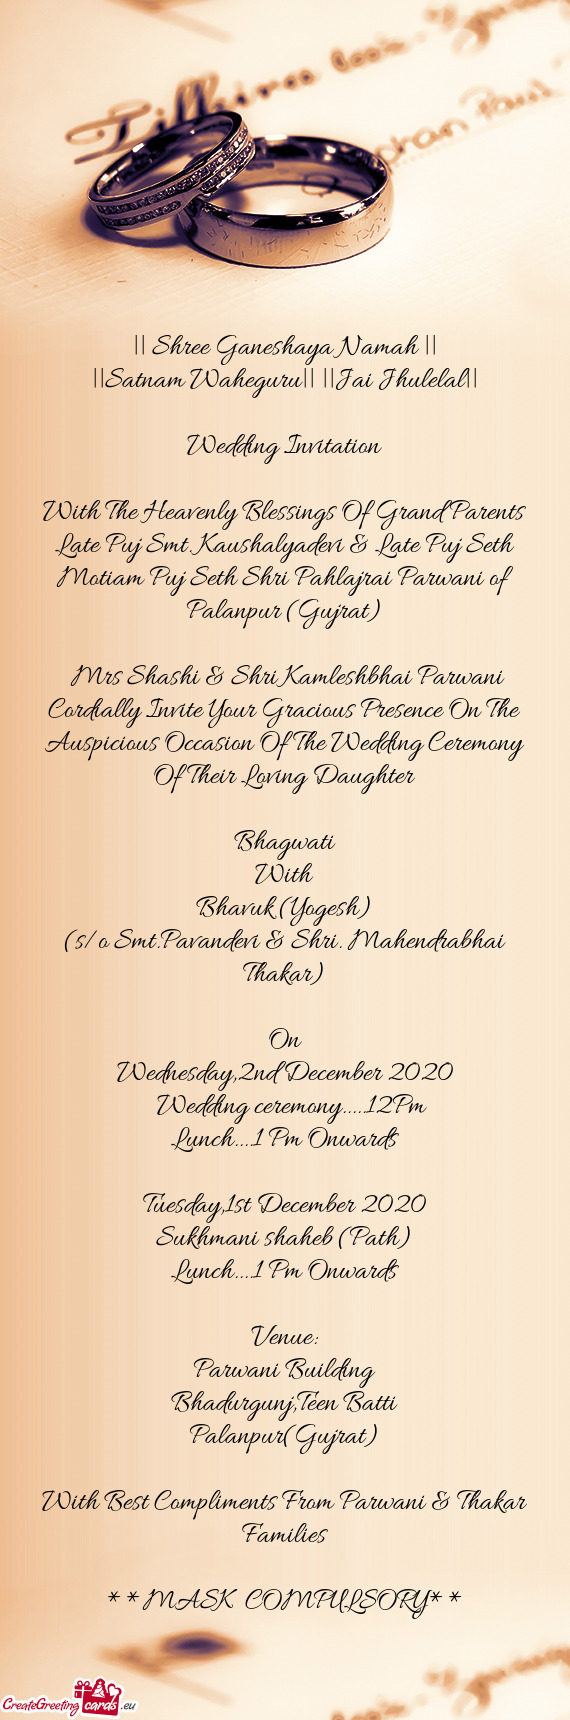 Late Puj Smt. Kaushalyadevi & Late Puj Seth Motiam Puj Seth Shri Pahlajrai Parwani of Palanpur (Gujr